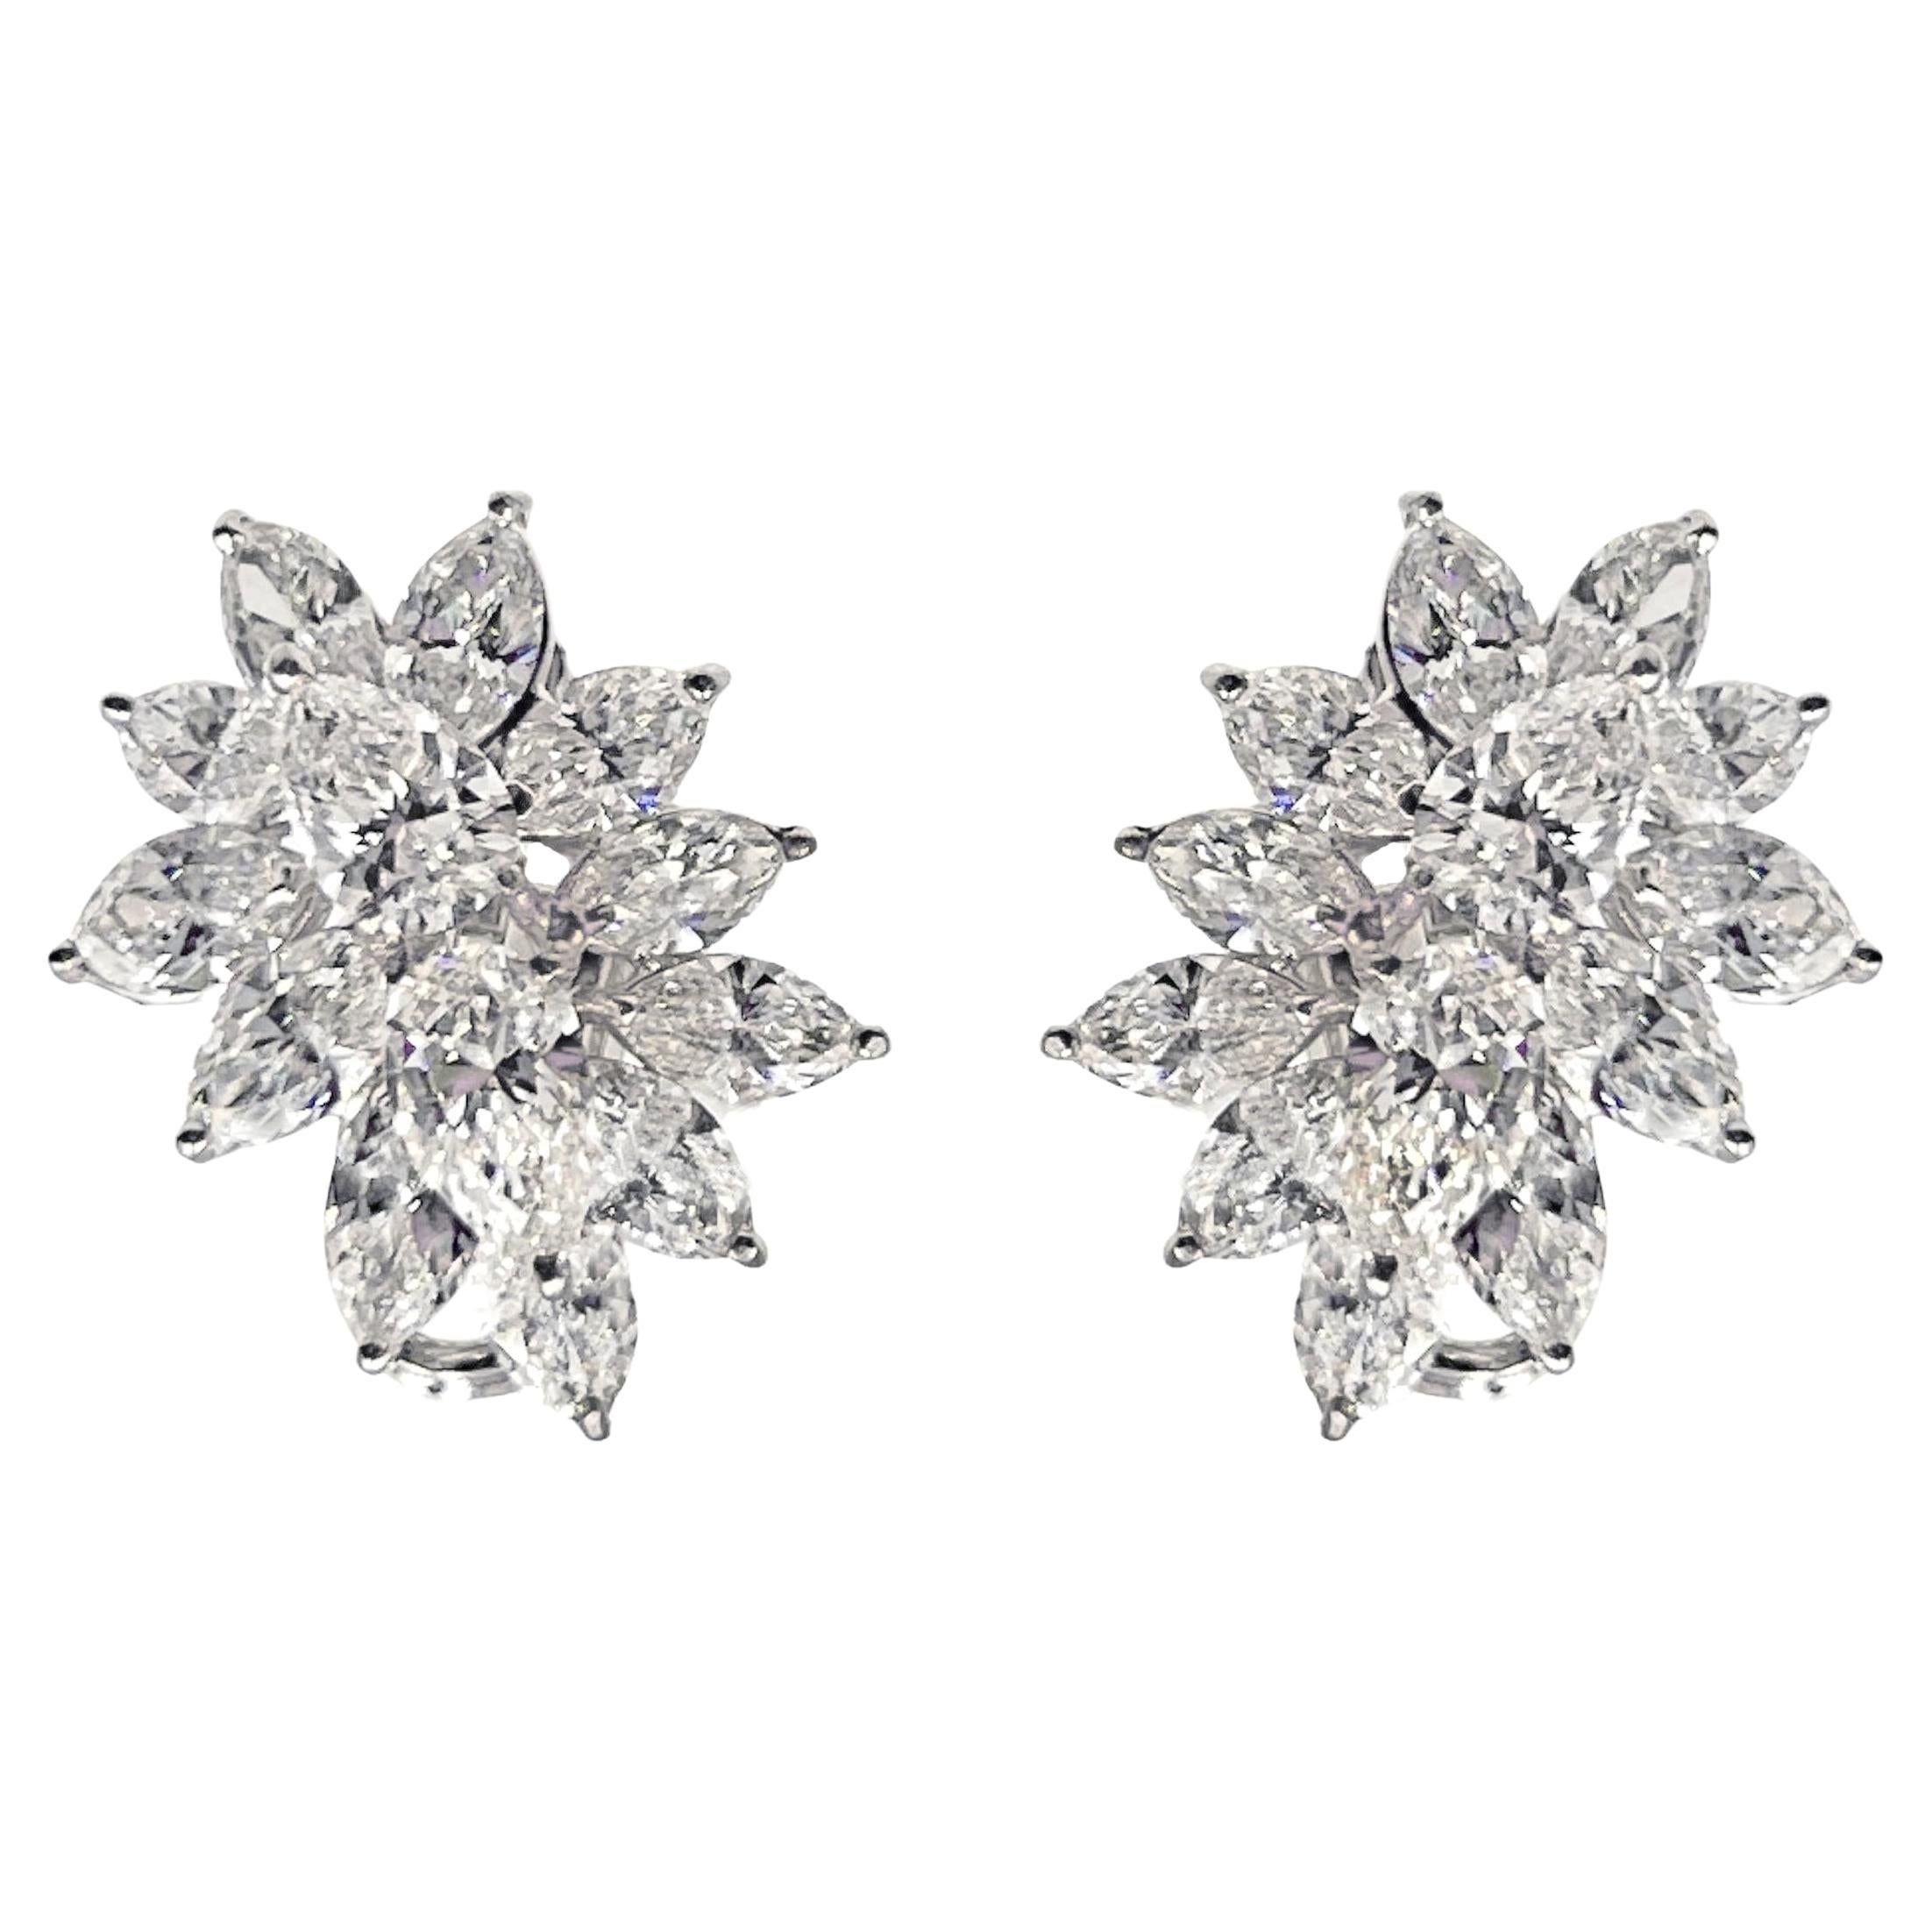 Harry Winston Platinum Diamond Cluster Earrings